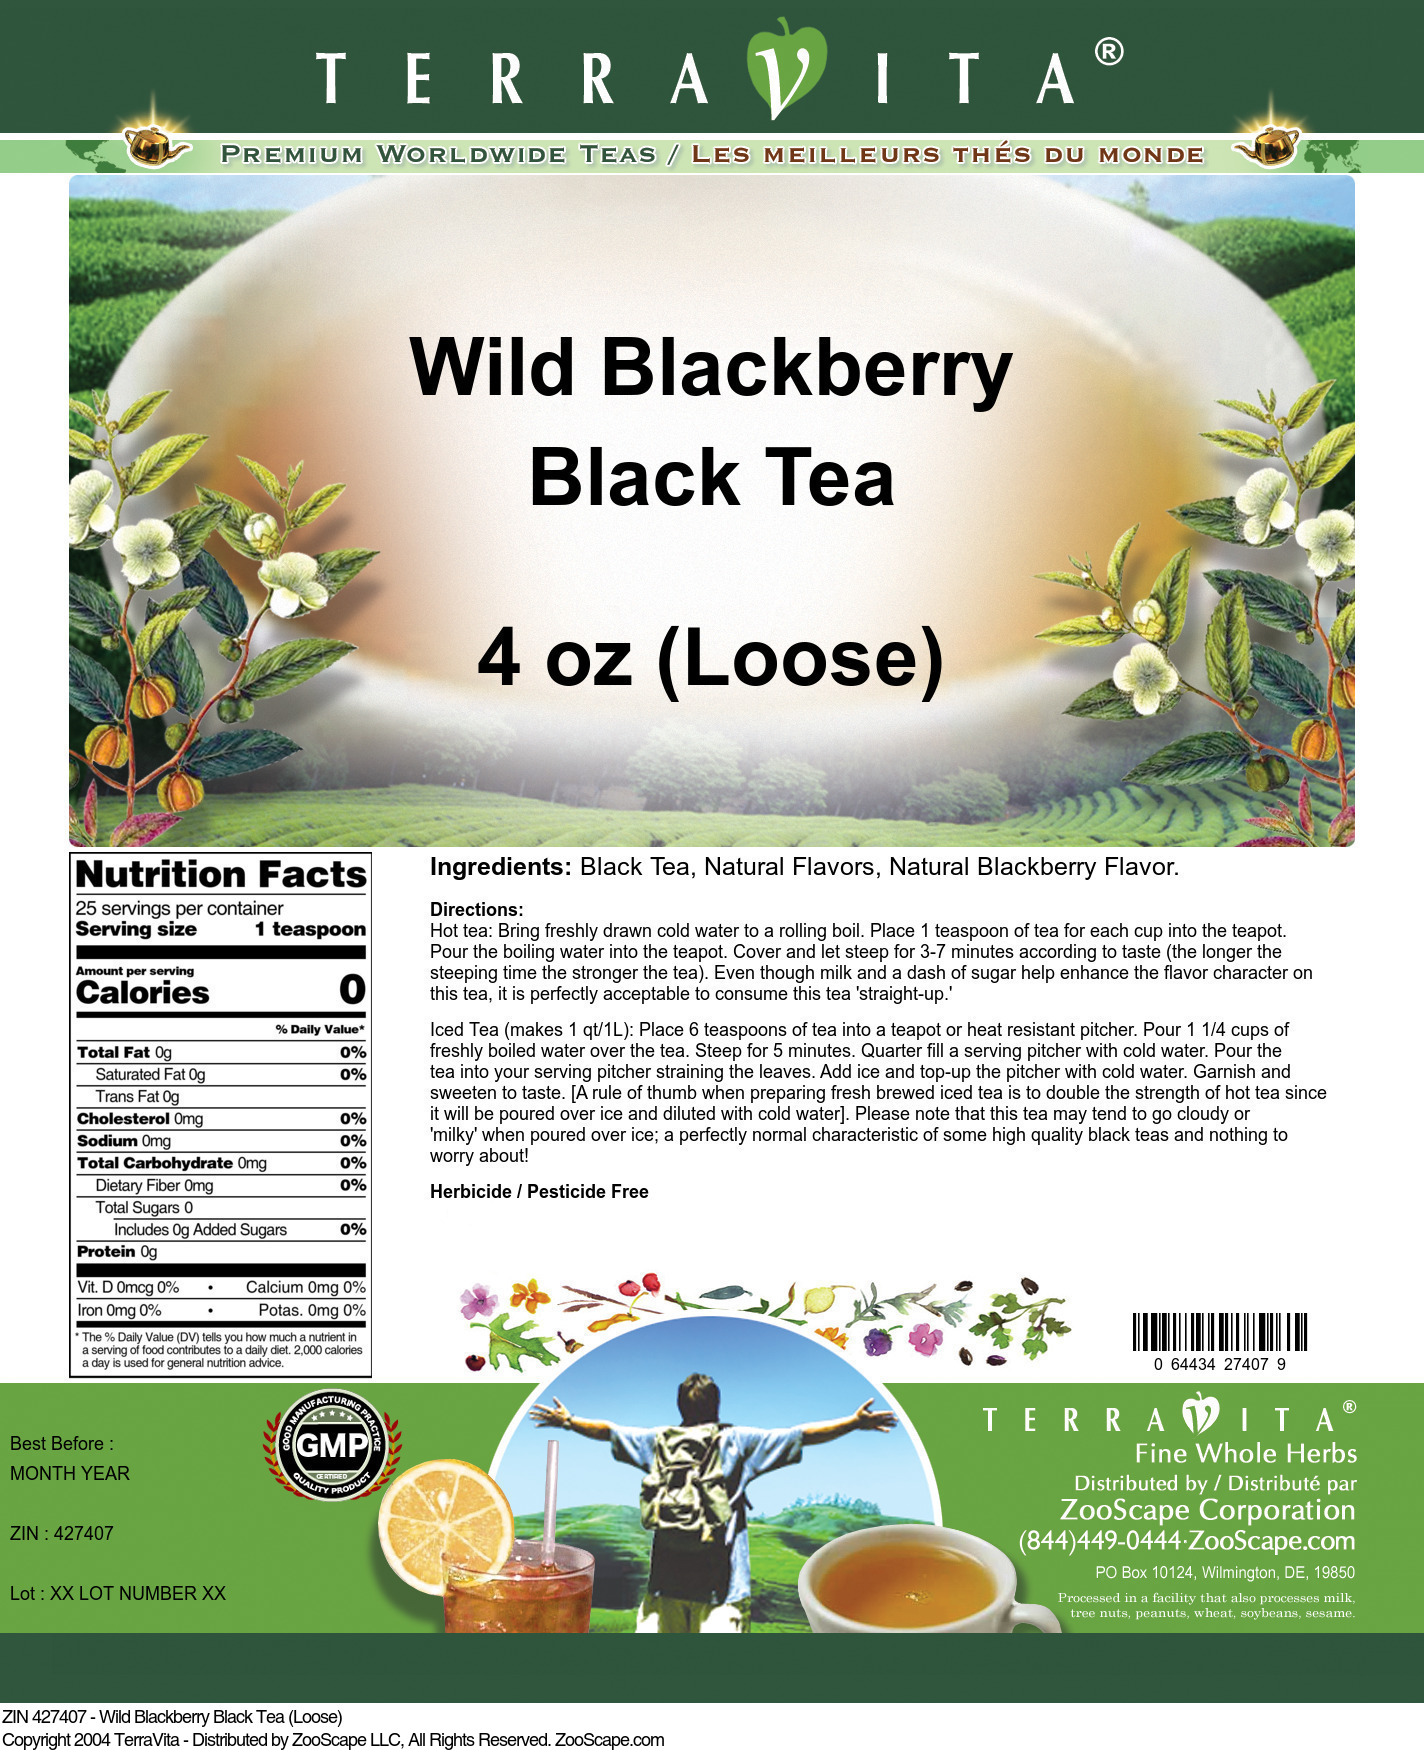 Wild Blackberry Black Tea (Loose) - Label